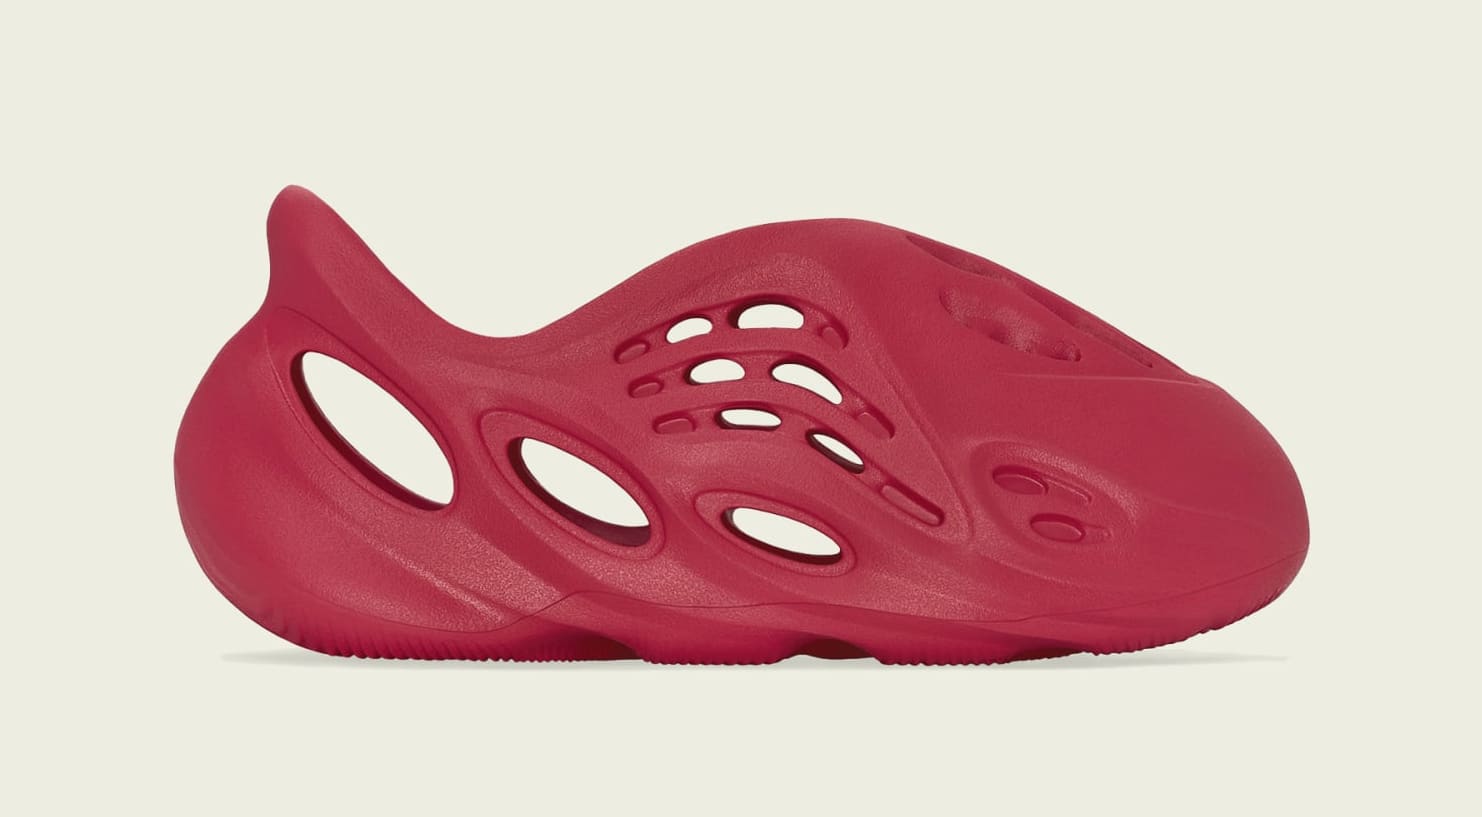 Adidas Yeezy Foam Runner 'Vermilion' Kids GX1136 Lateral